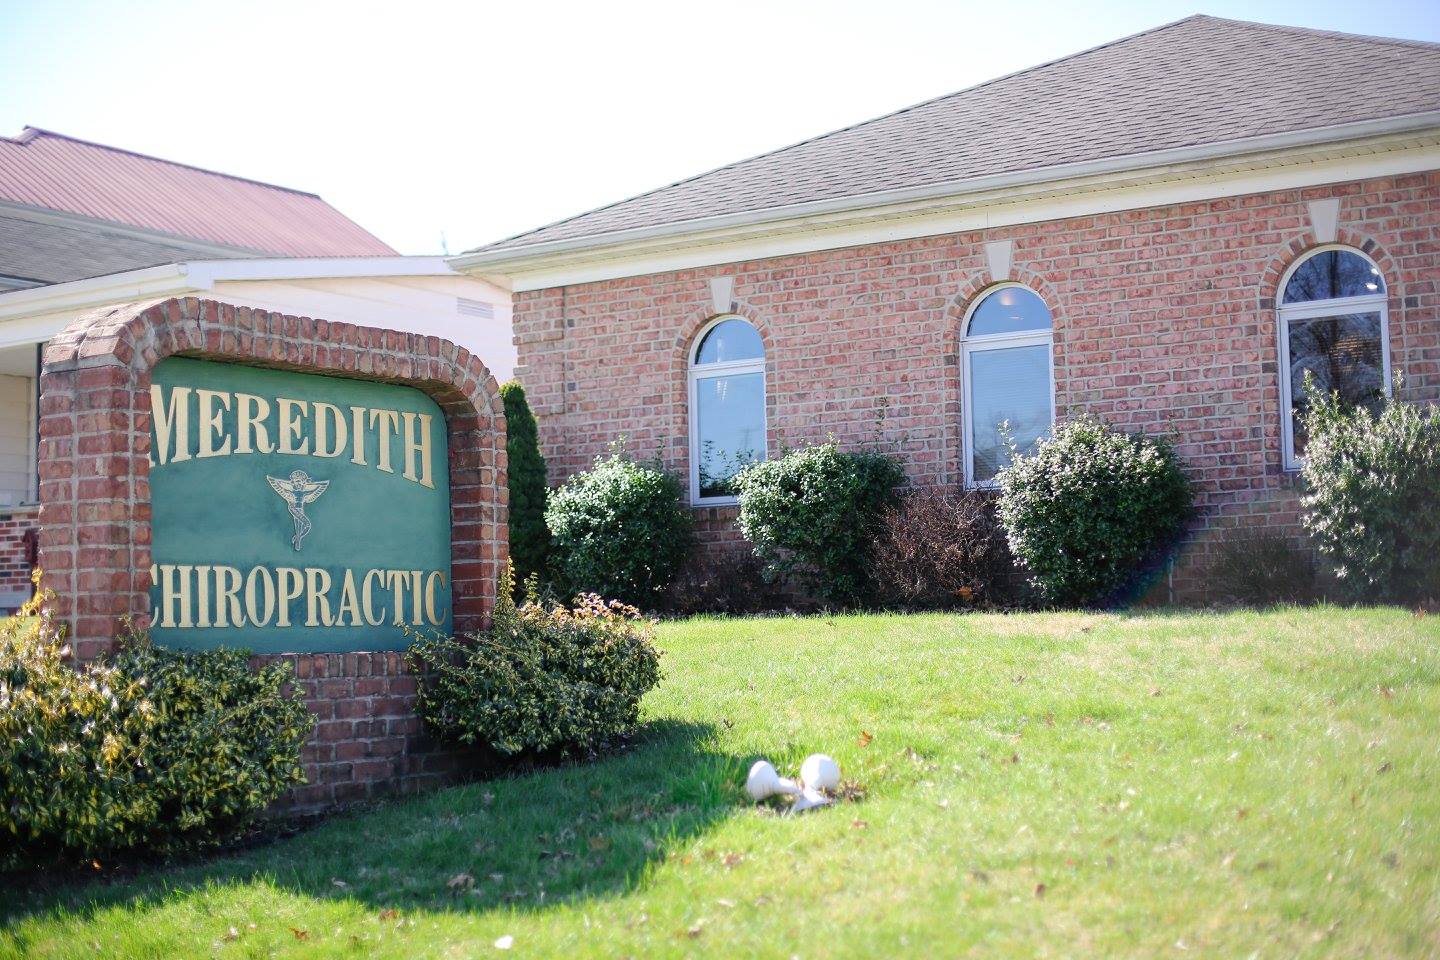 Chiropractor office in Ashland Kentucky